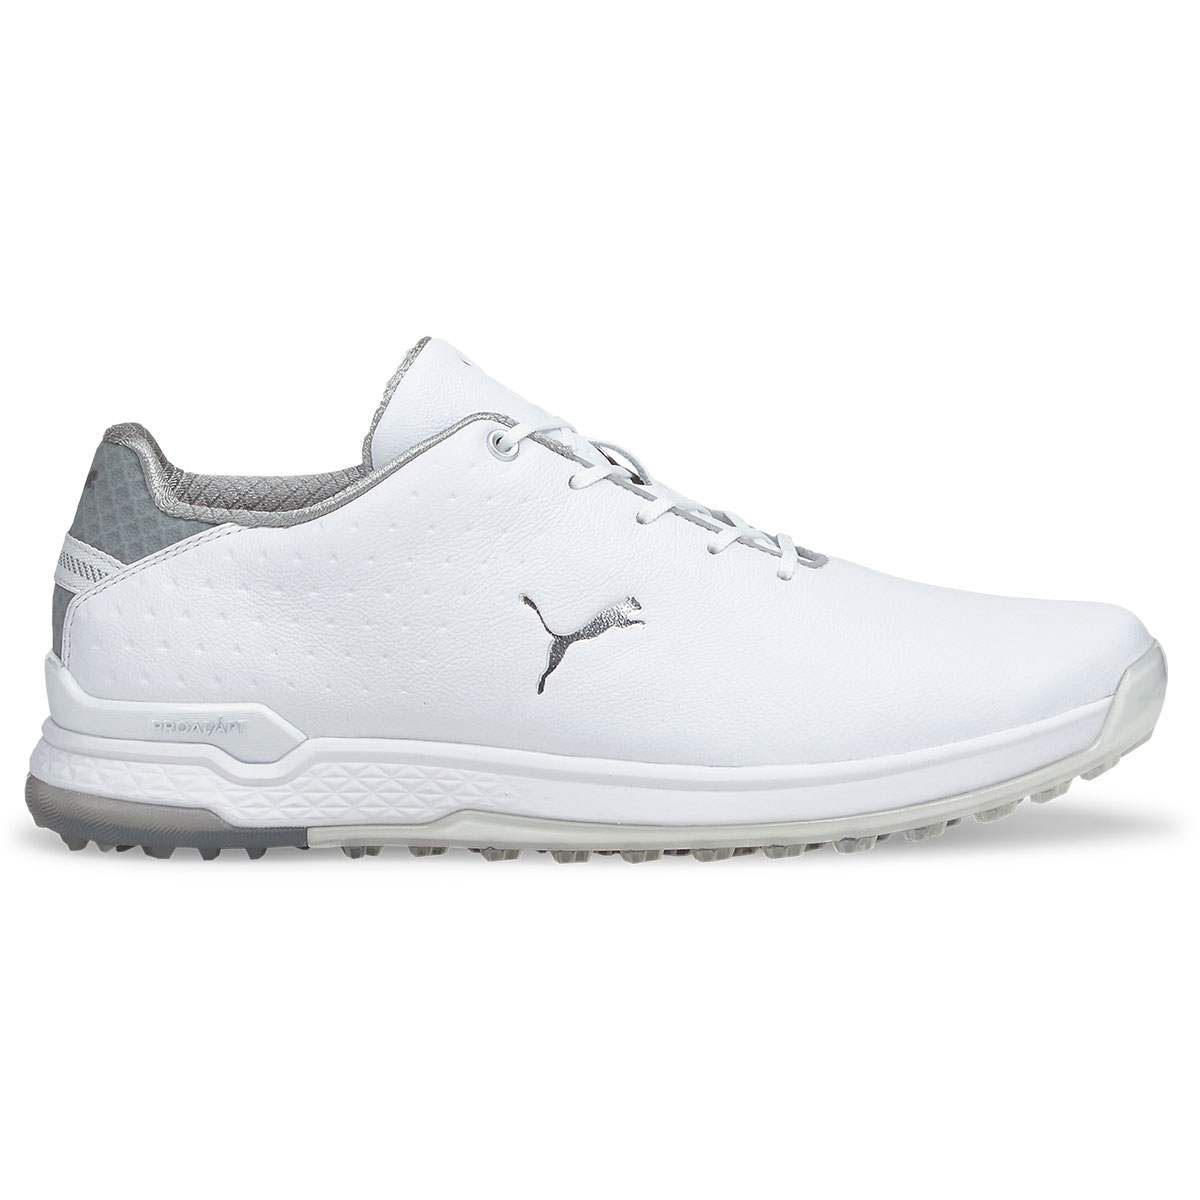 PUMA Men's PROADAPT ALPHACAT Leather Waterproof Spikeless Golf Shoes ...